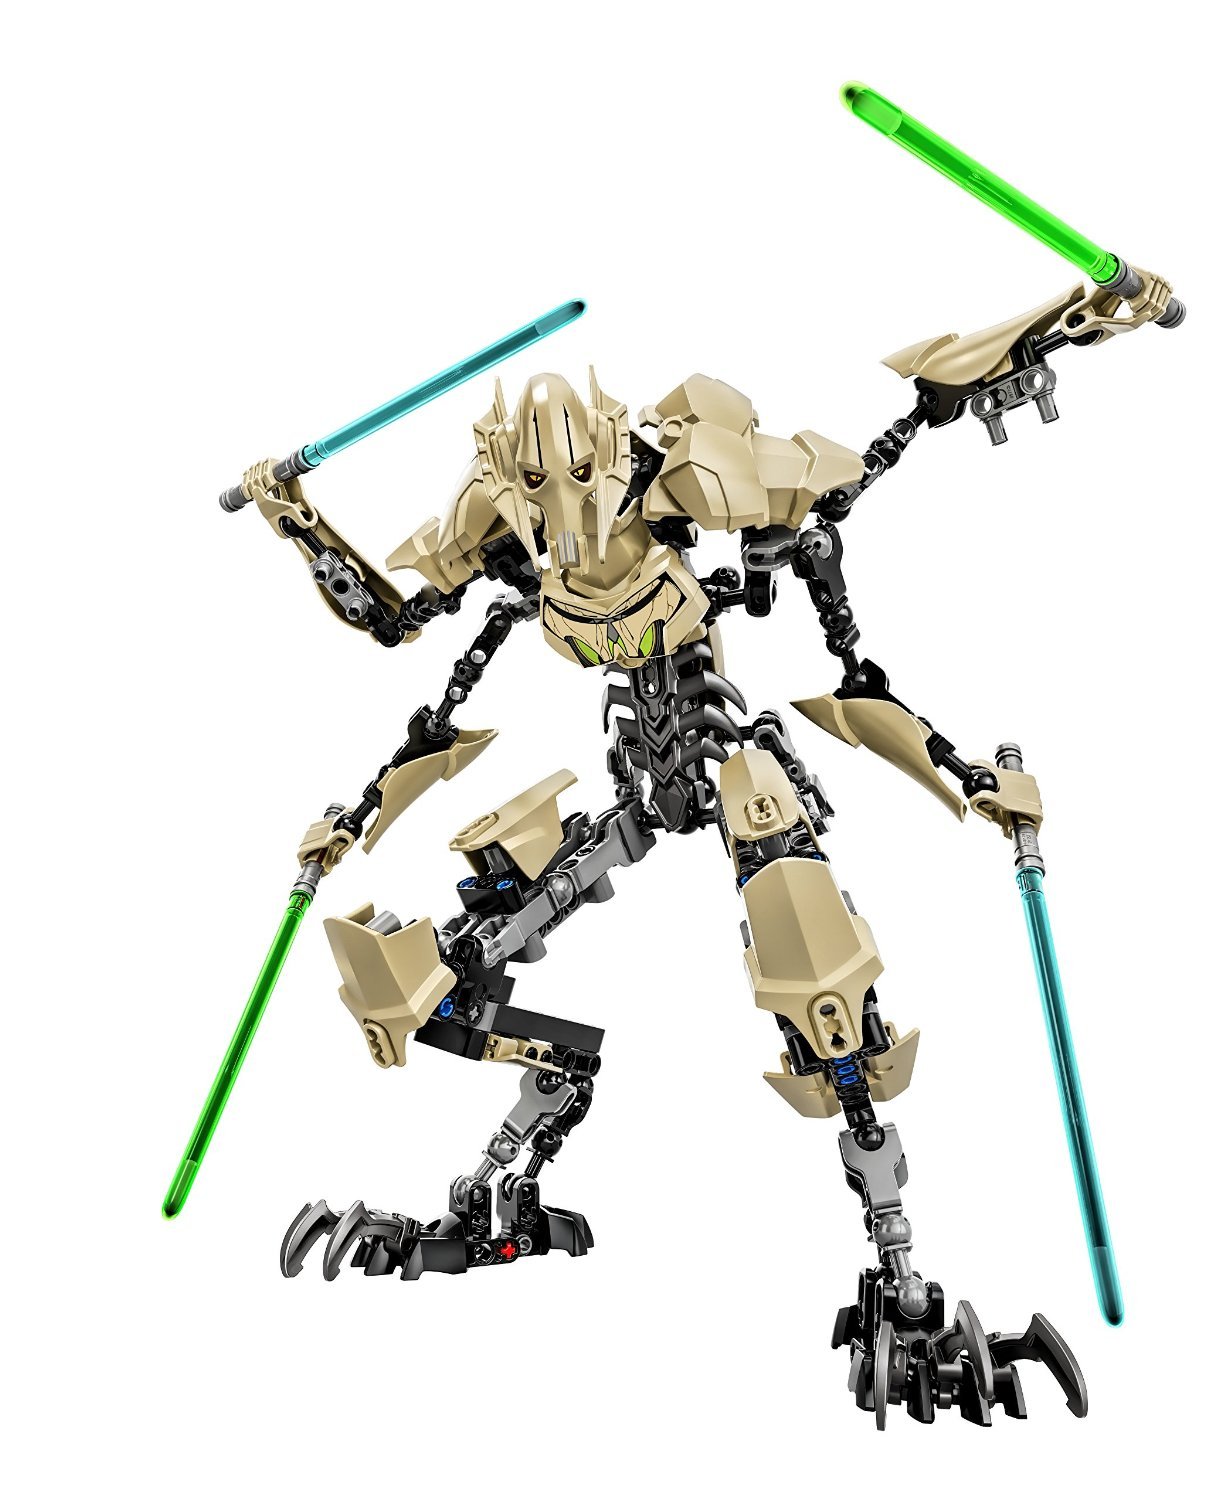 Model Kit Réplica Action Figure General Grievous: Star Wars 26cm 186 Peças Lego Black Friday - MKP